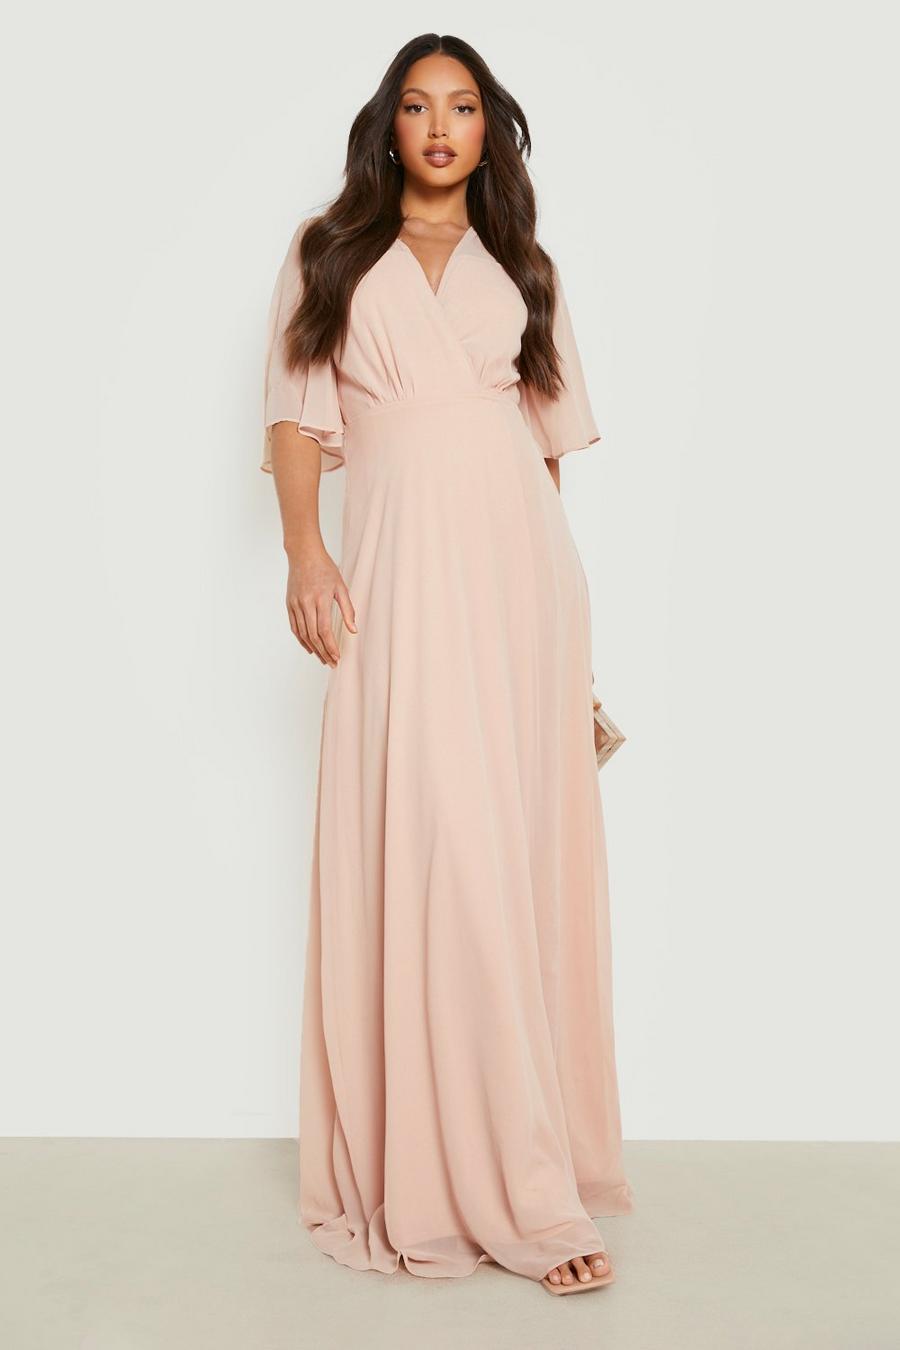 Blush rose Tall Angel Sleeve Wrap Bridesmaid Dress